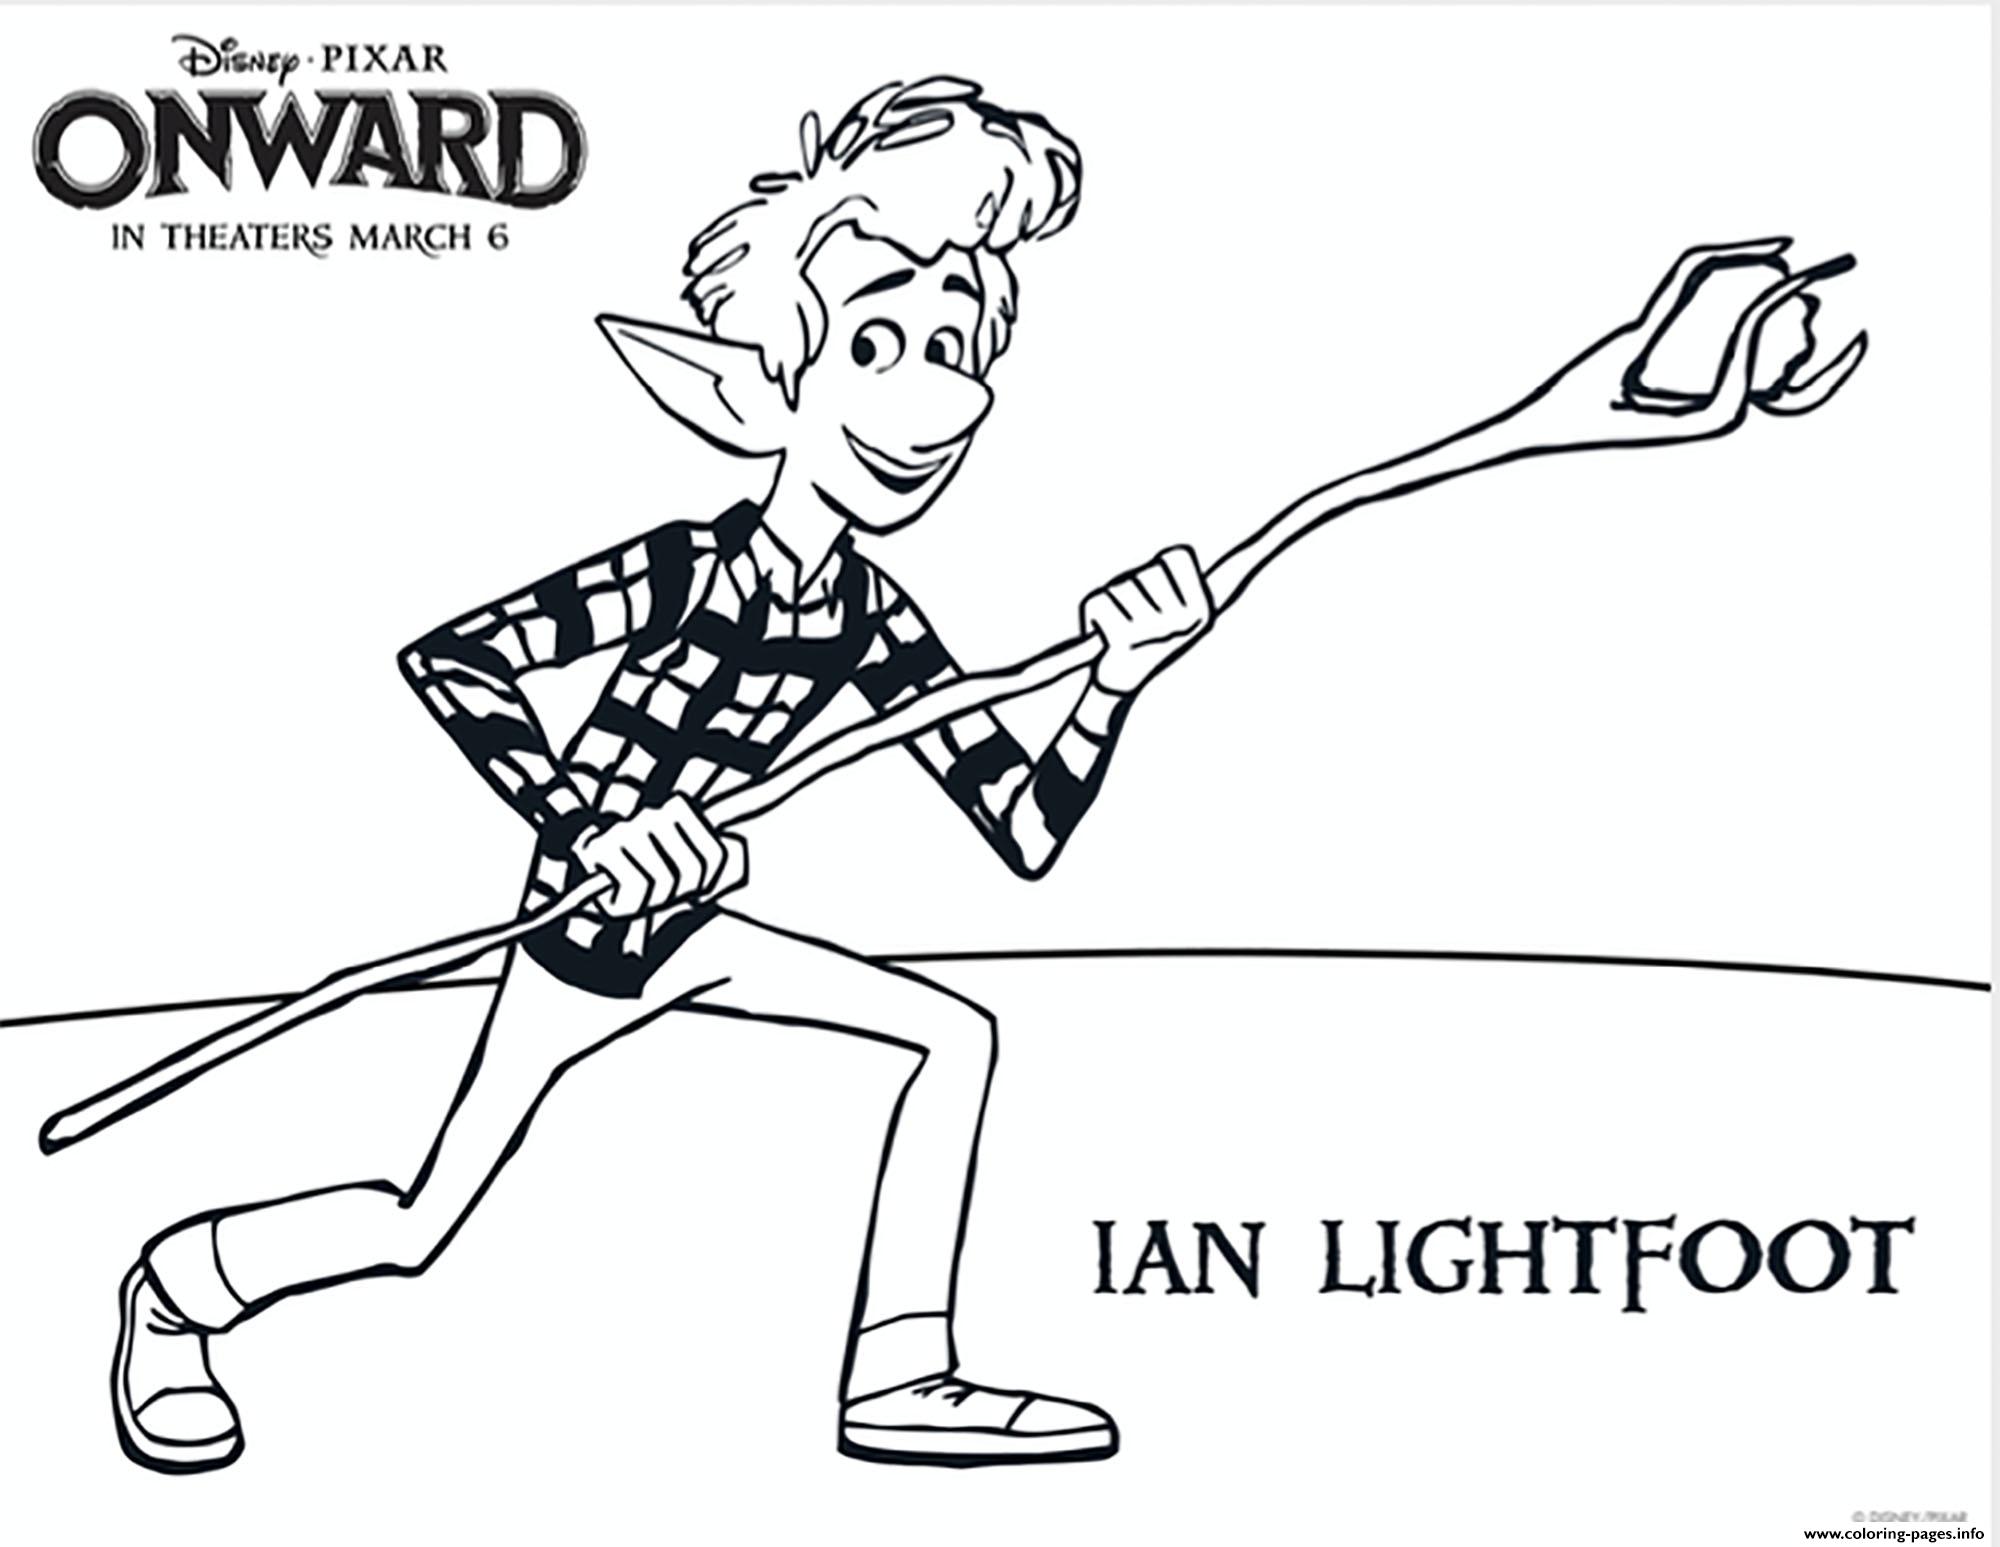 Ian Lightfoot Onward coloring